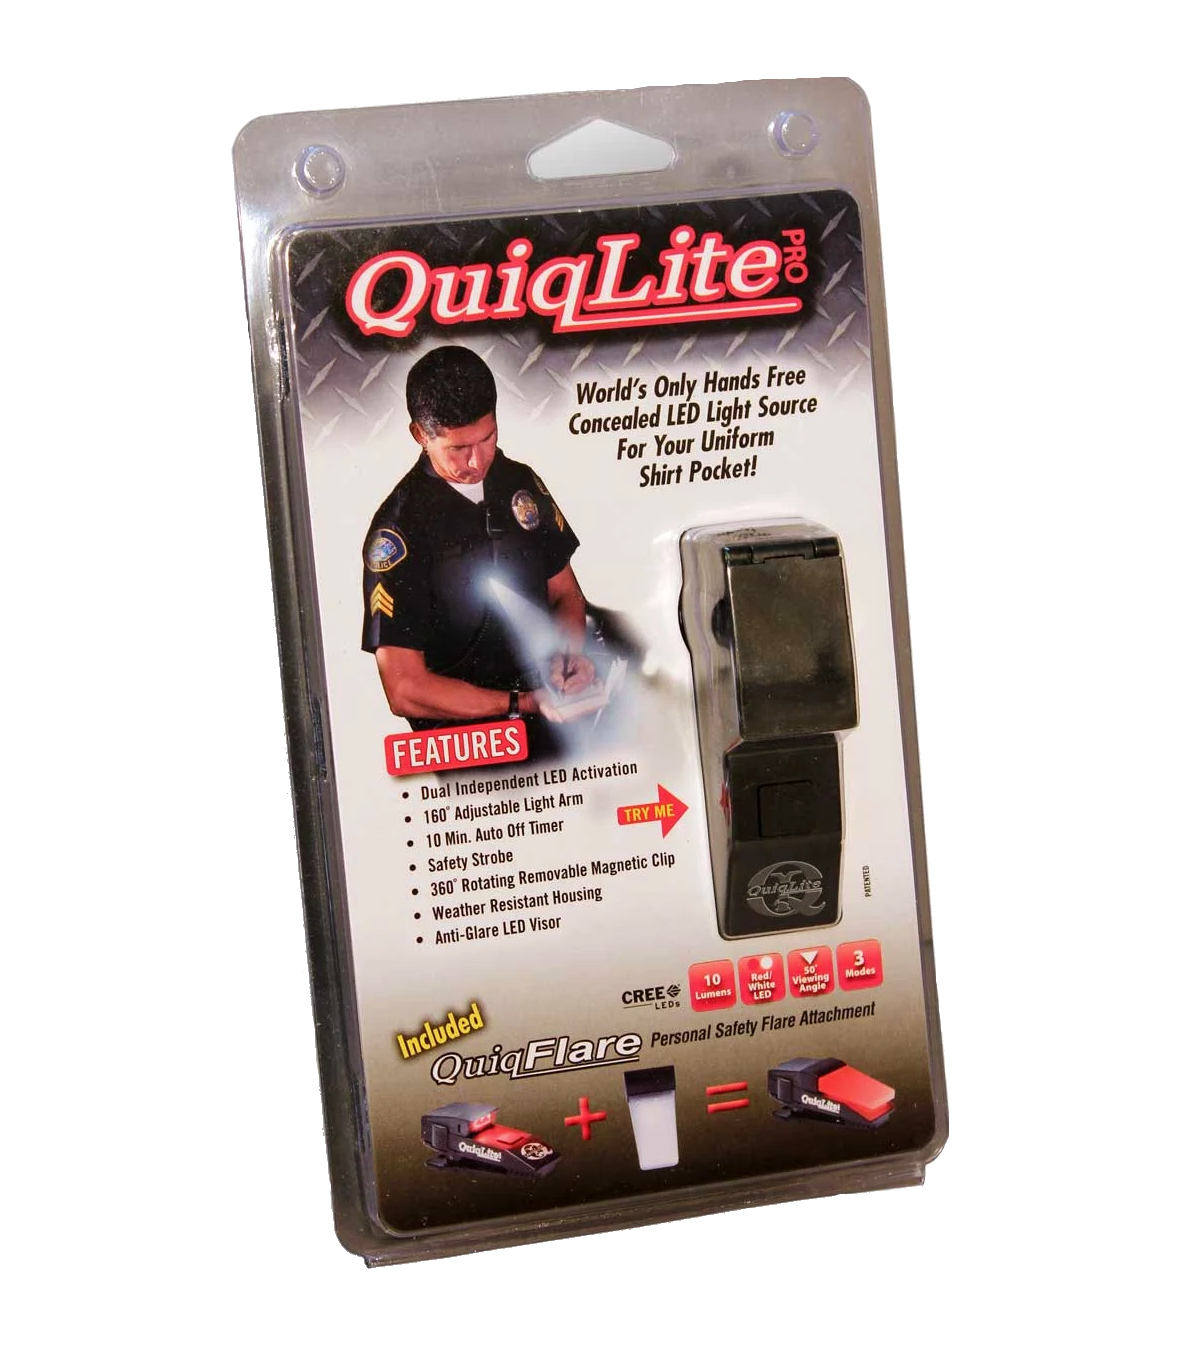 Quiqlite Pro packaging